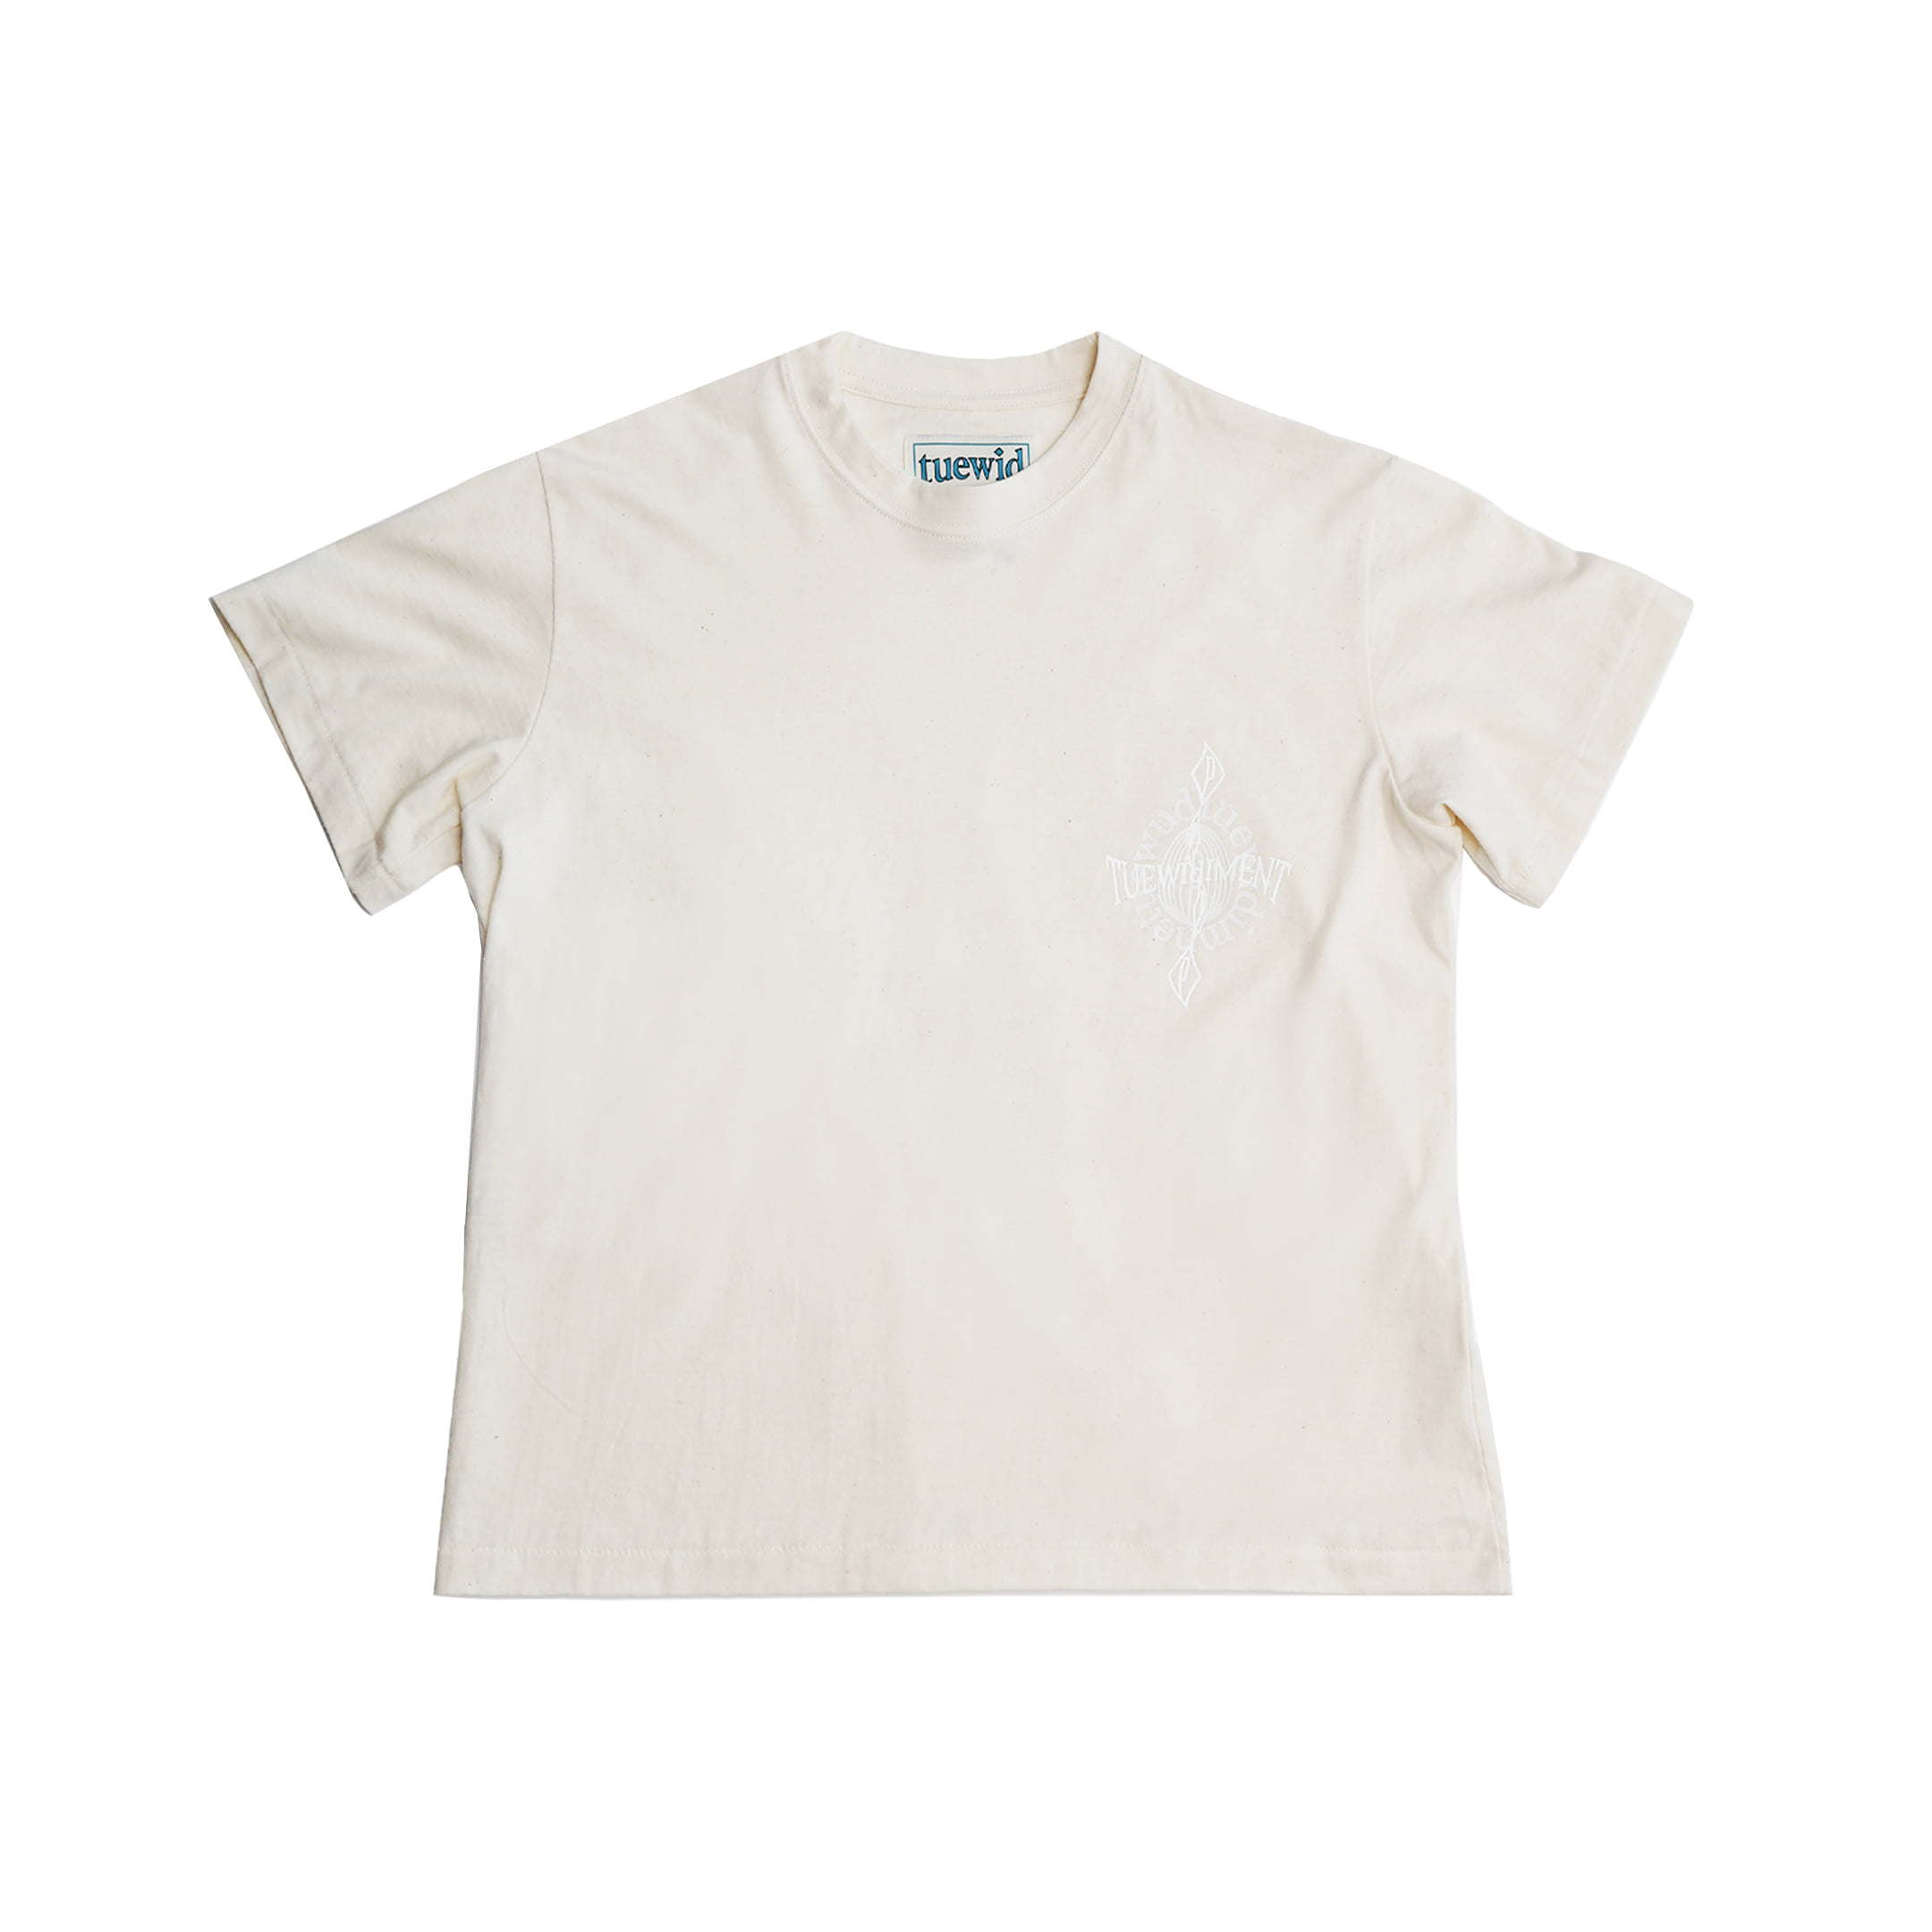 tuewid Ivory Cotton Tshirts